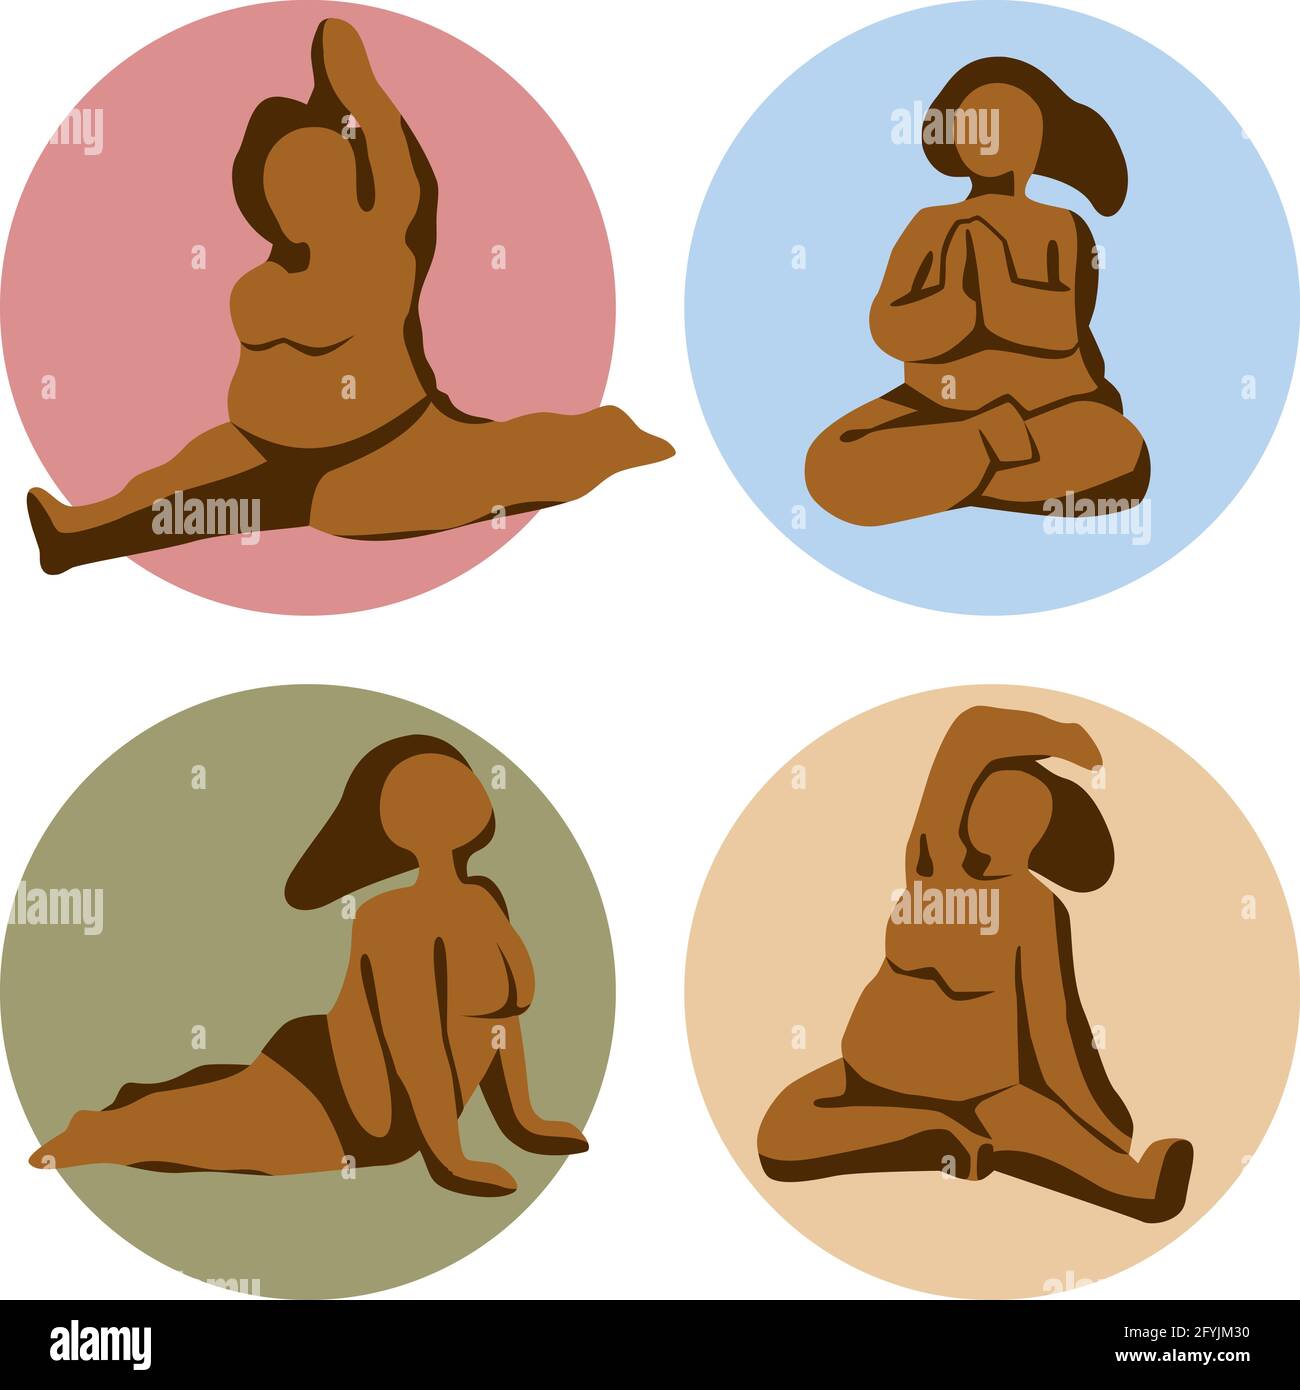 Plus size fat abstract woman workout in yoga poses. Bodypositive lady icons set. Active overweight girl. Up dog svanasana, cobra, lotus, monkey hanumanasana yoga poses vector illustration Stock Vector